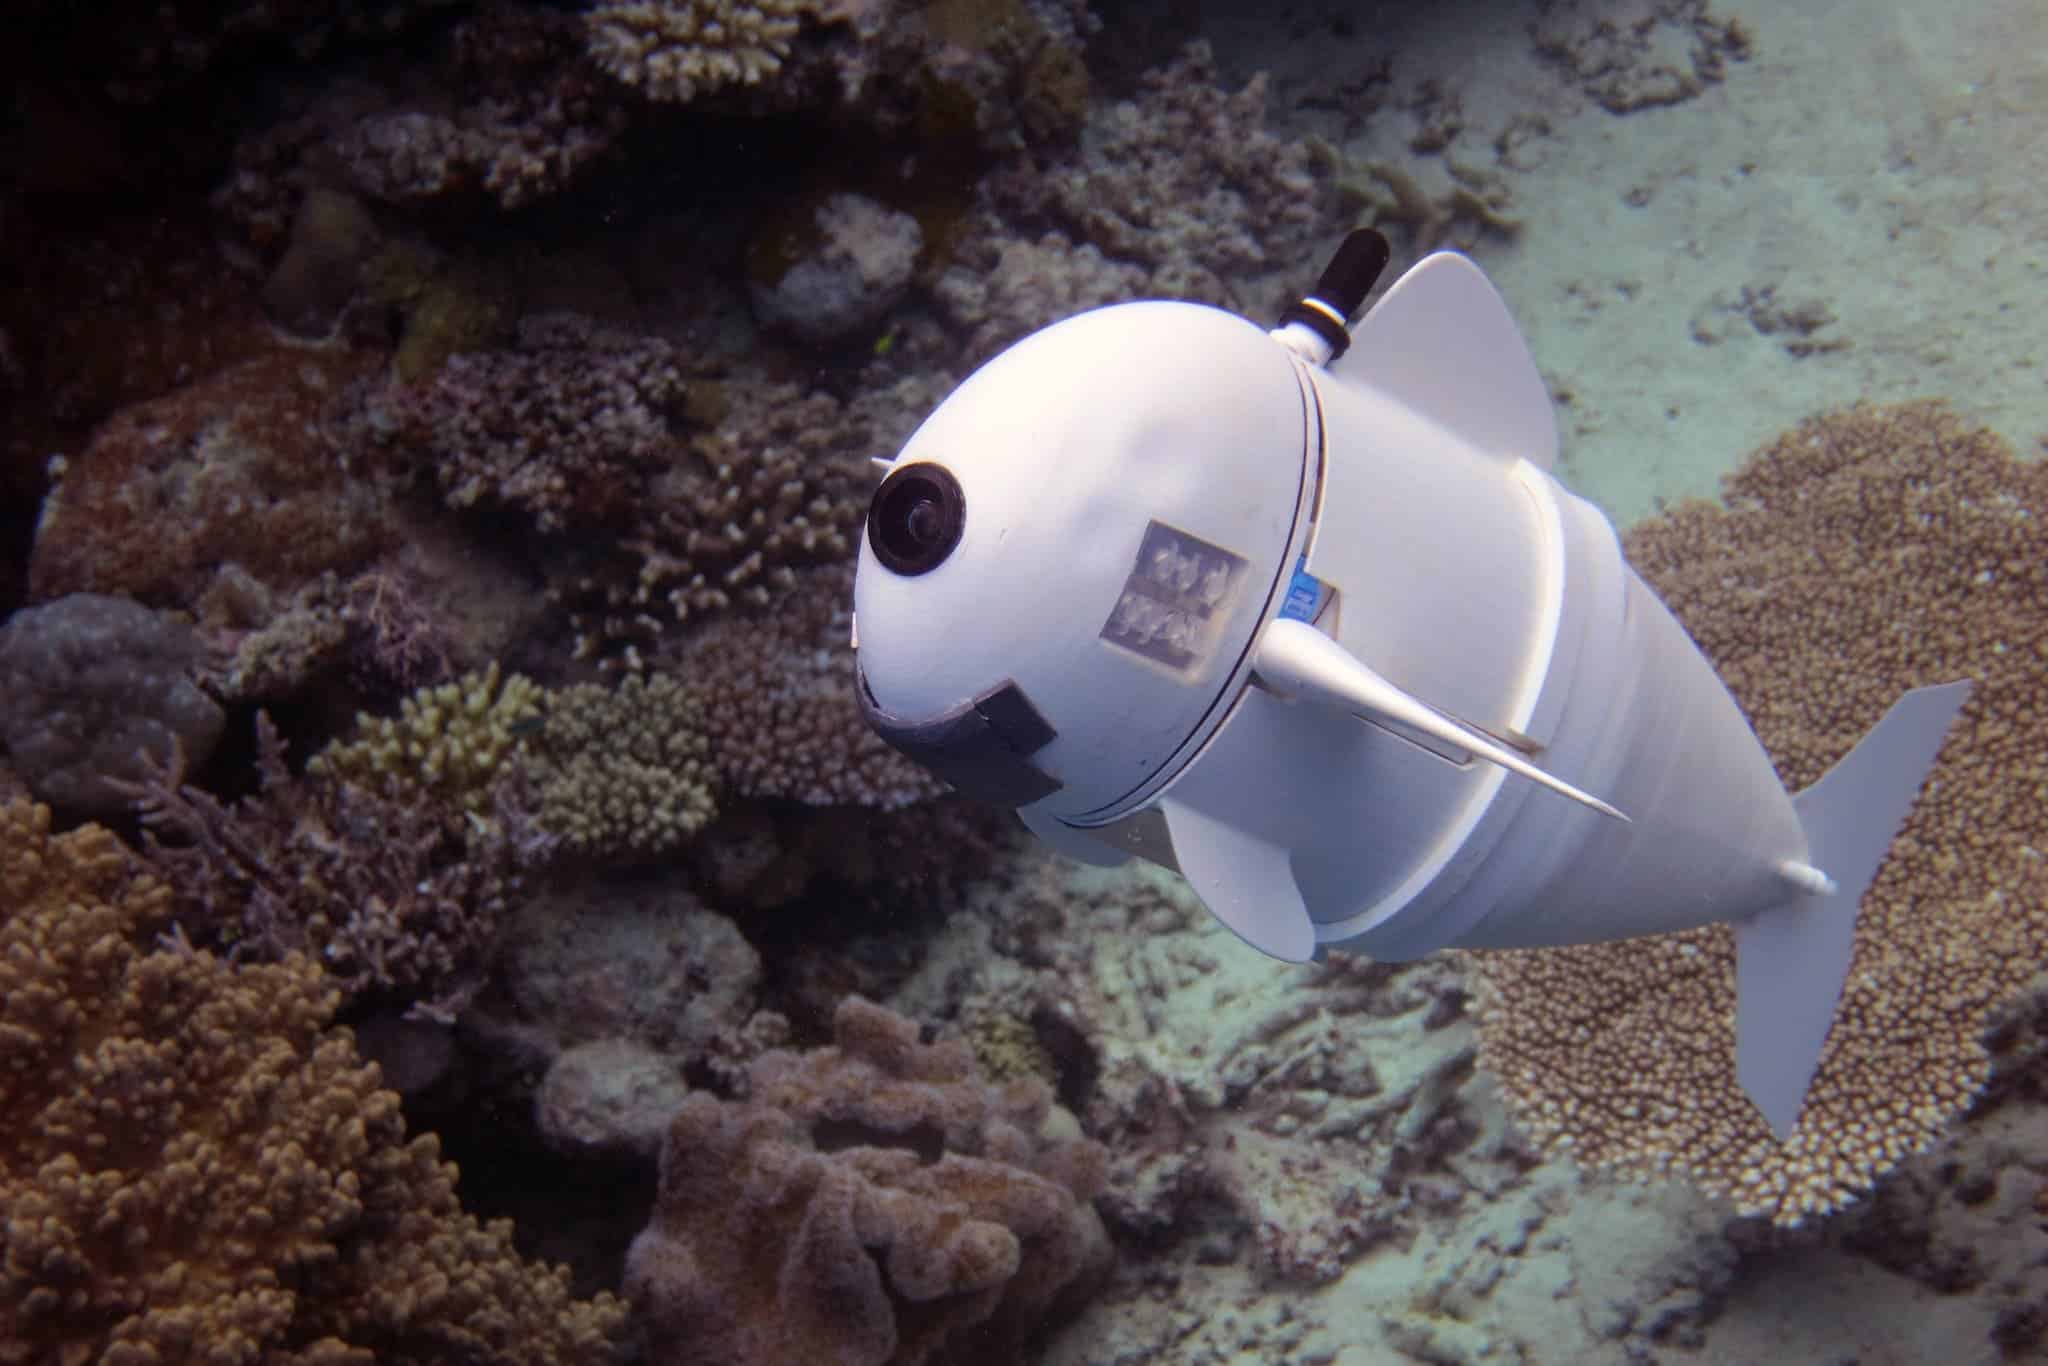 This is SoFi, a robotic fish designed at MIT. Credit: MIT.